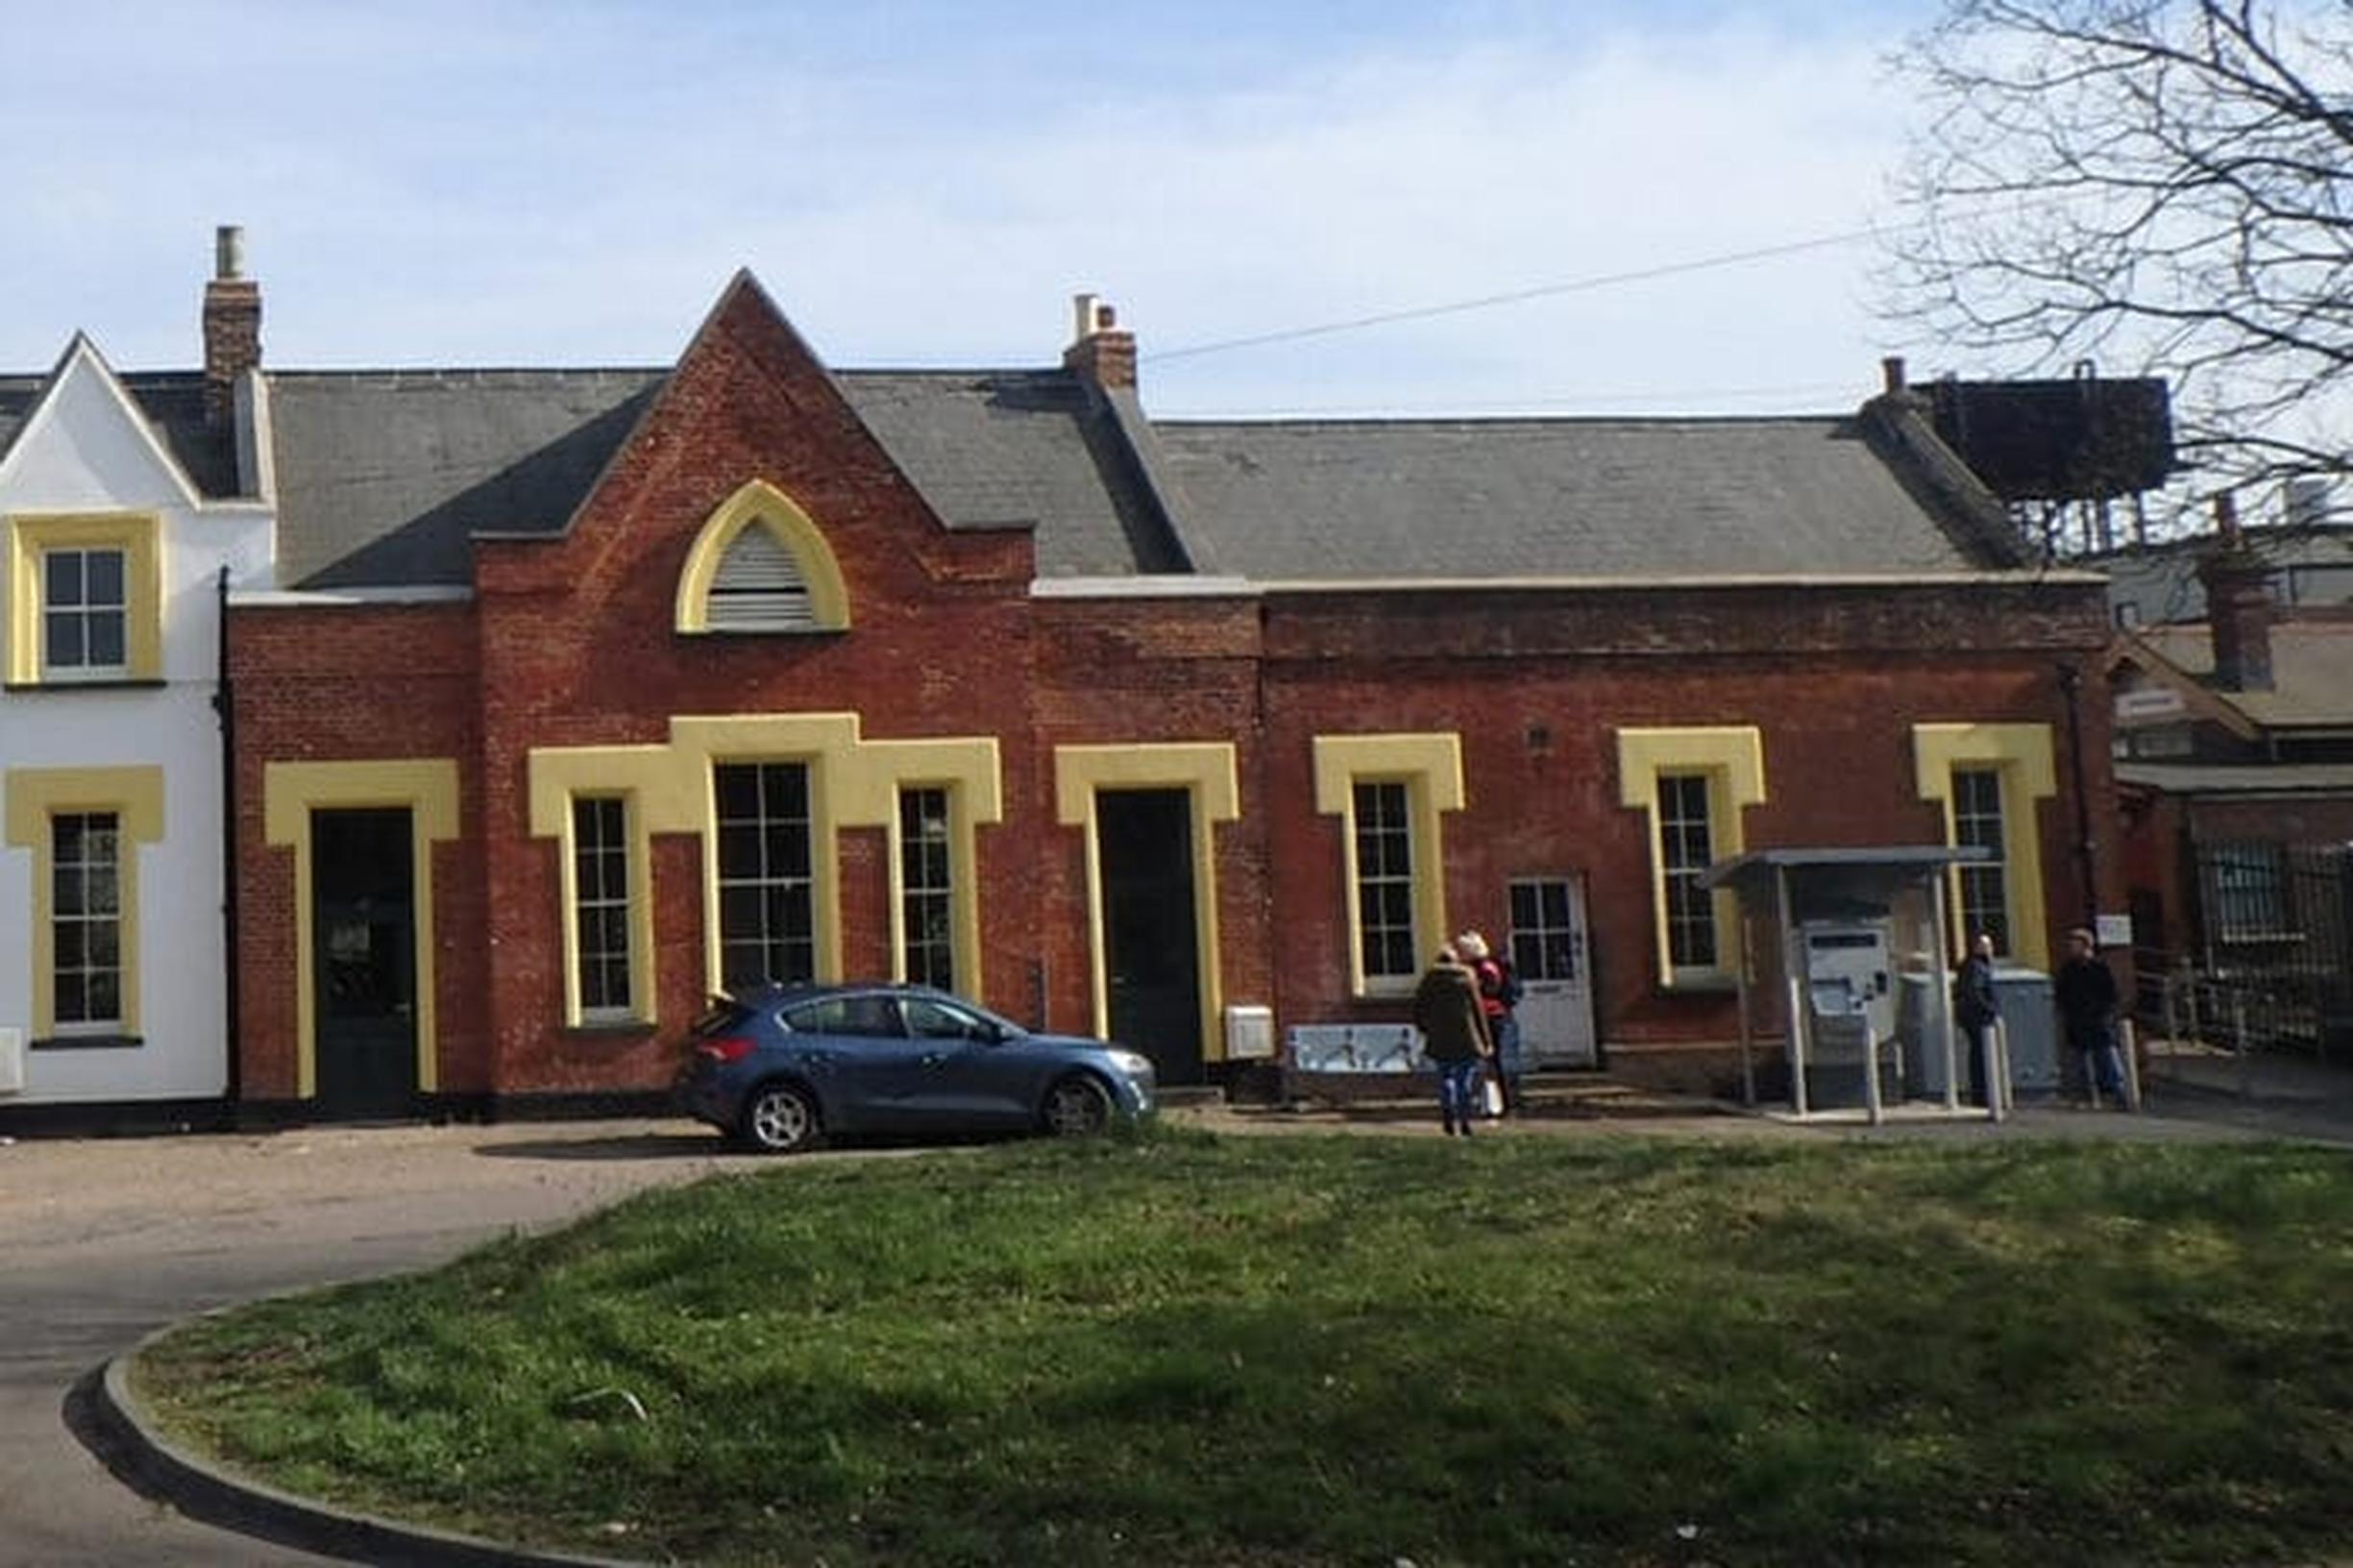 Attleborough station